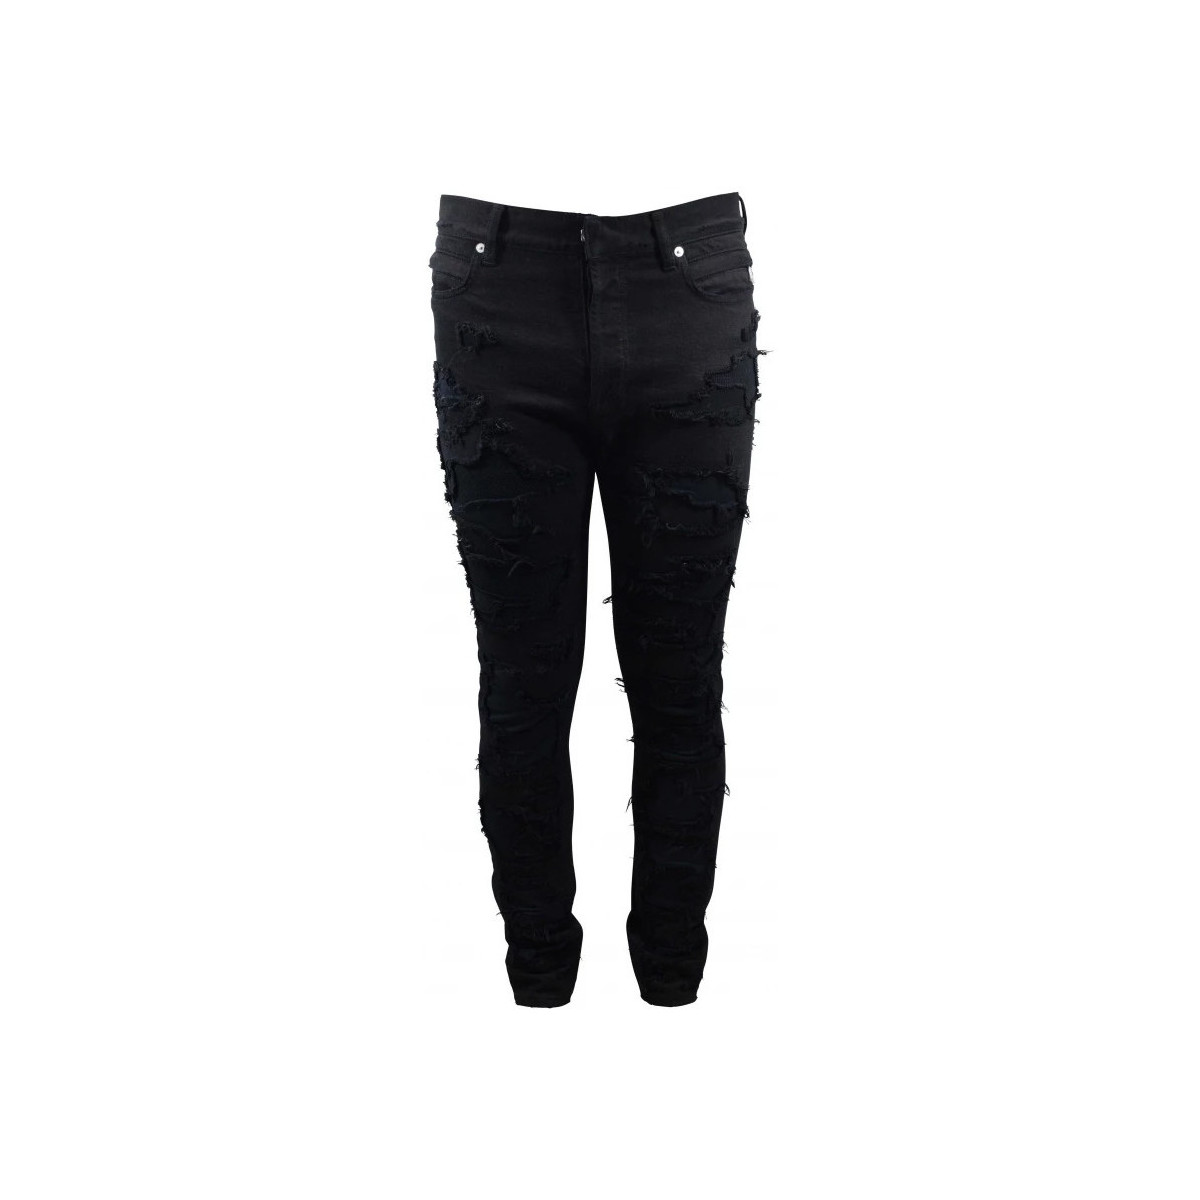 Textiel Heren Jeans Balmain  Zwart